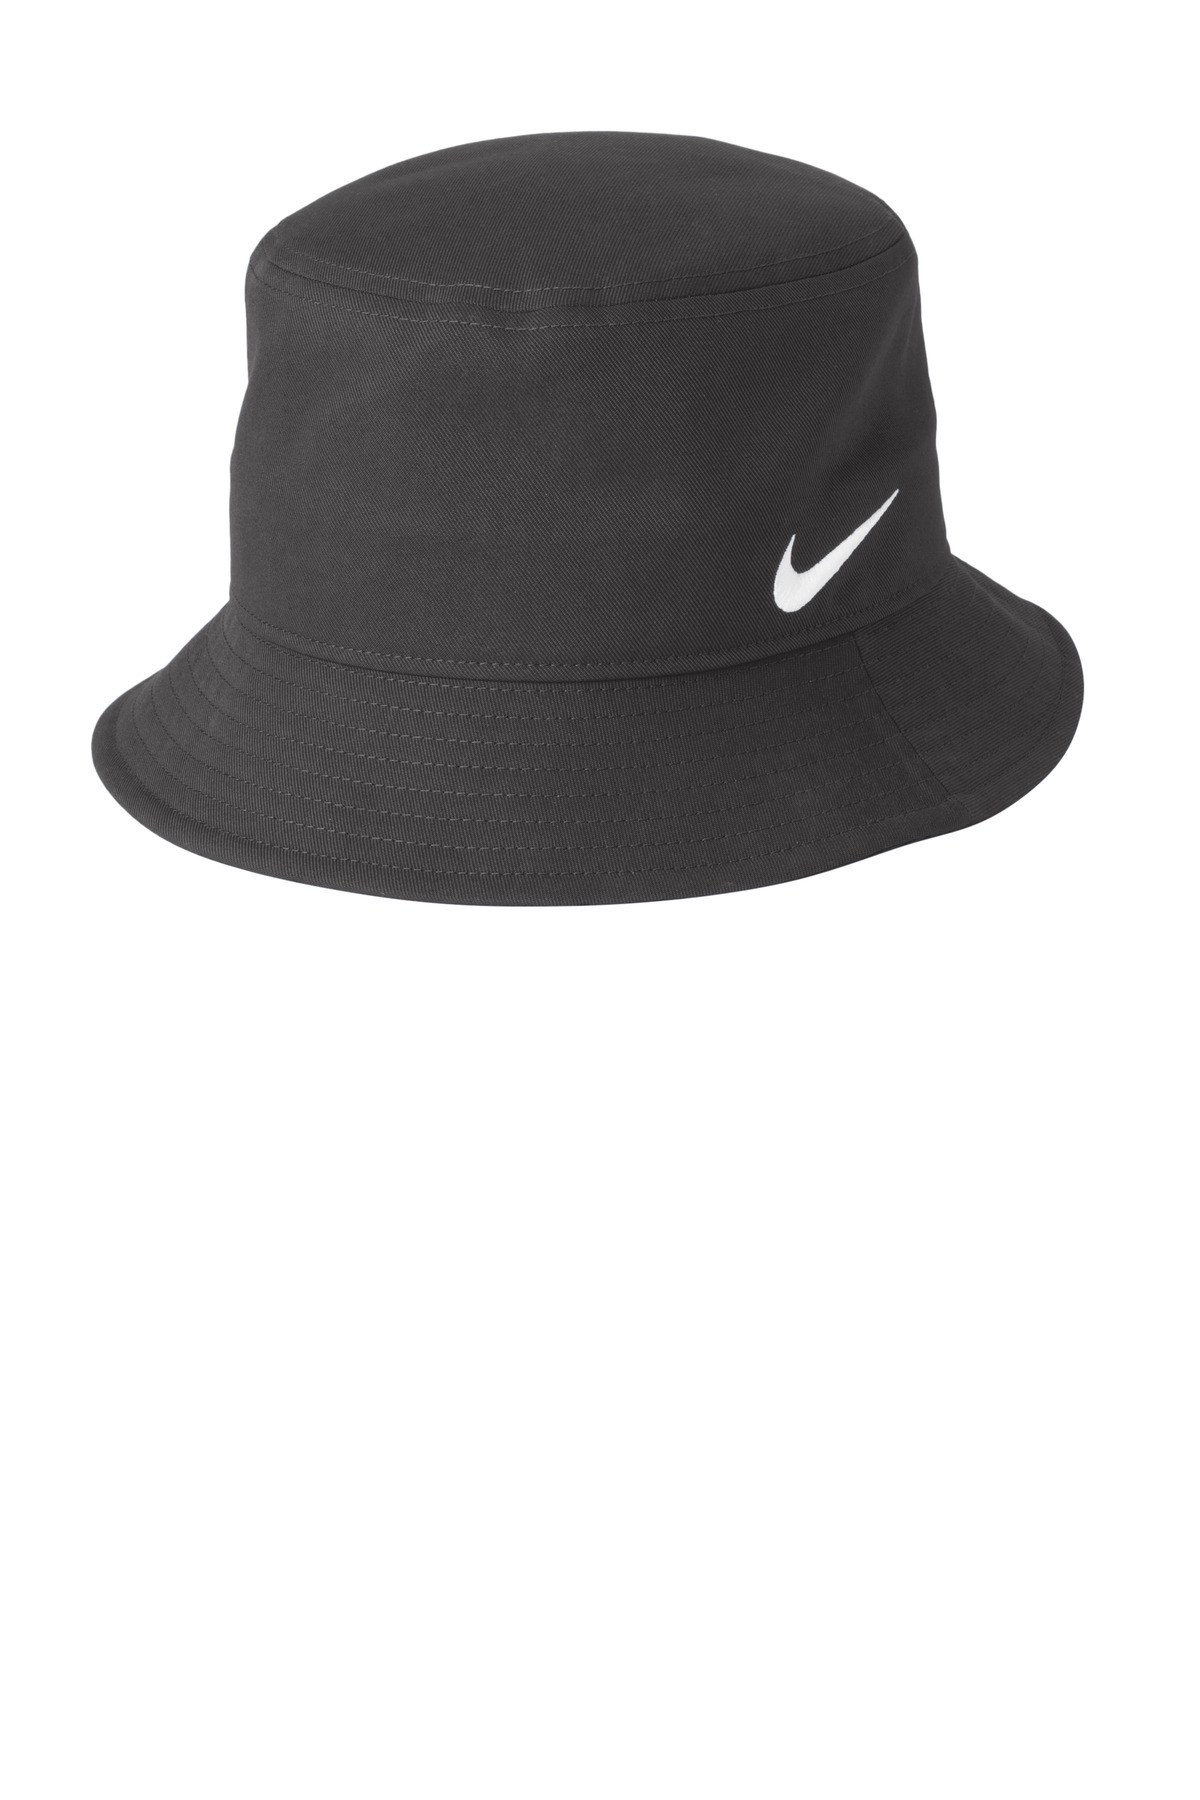 Nike Swoosh Bucket Hat-Nike